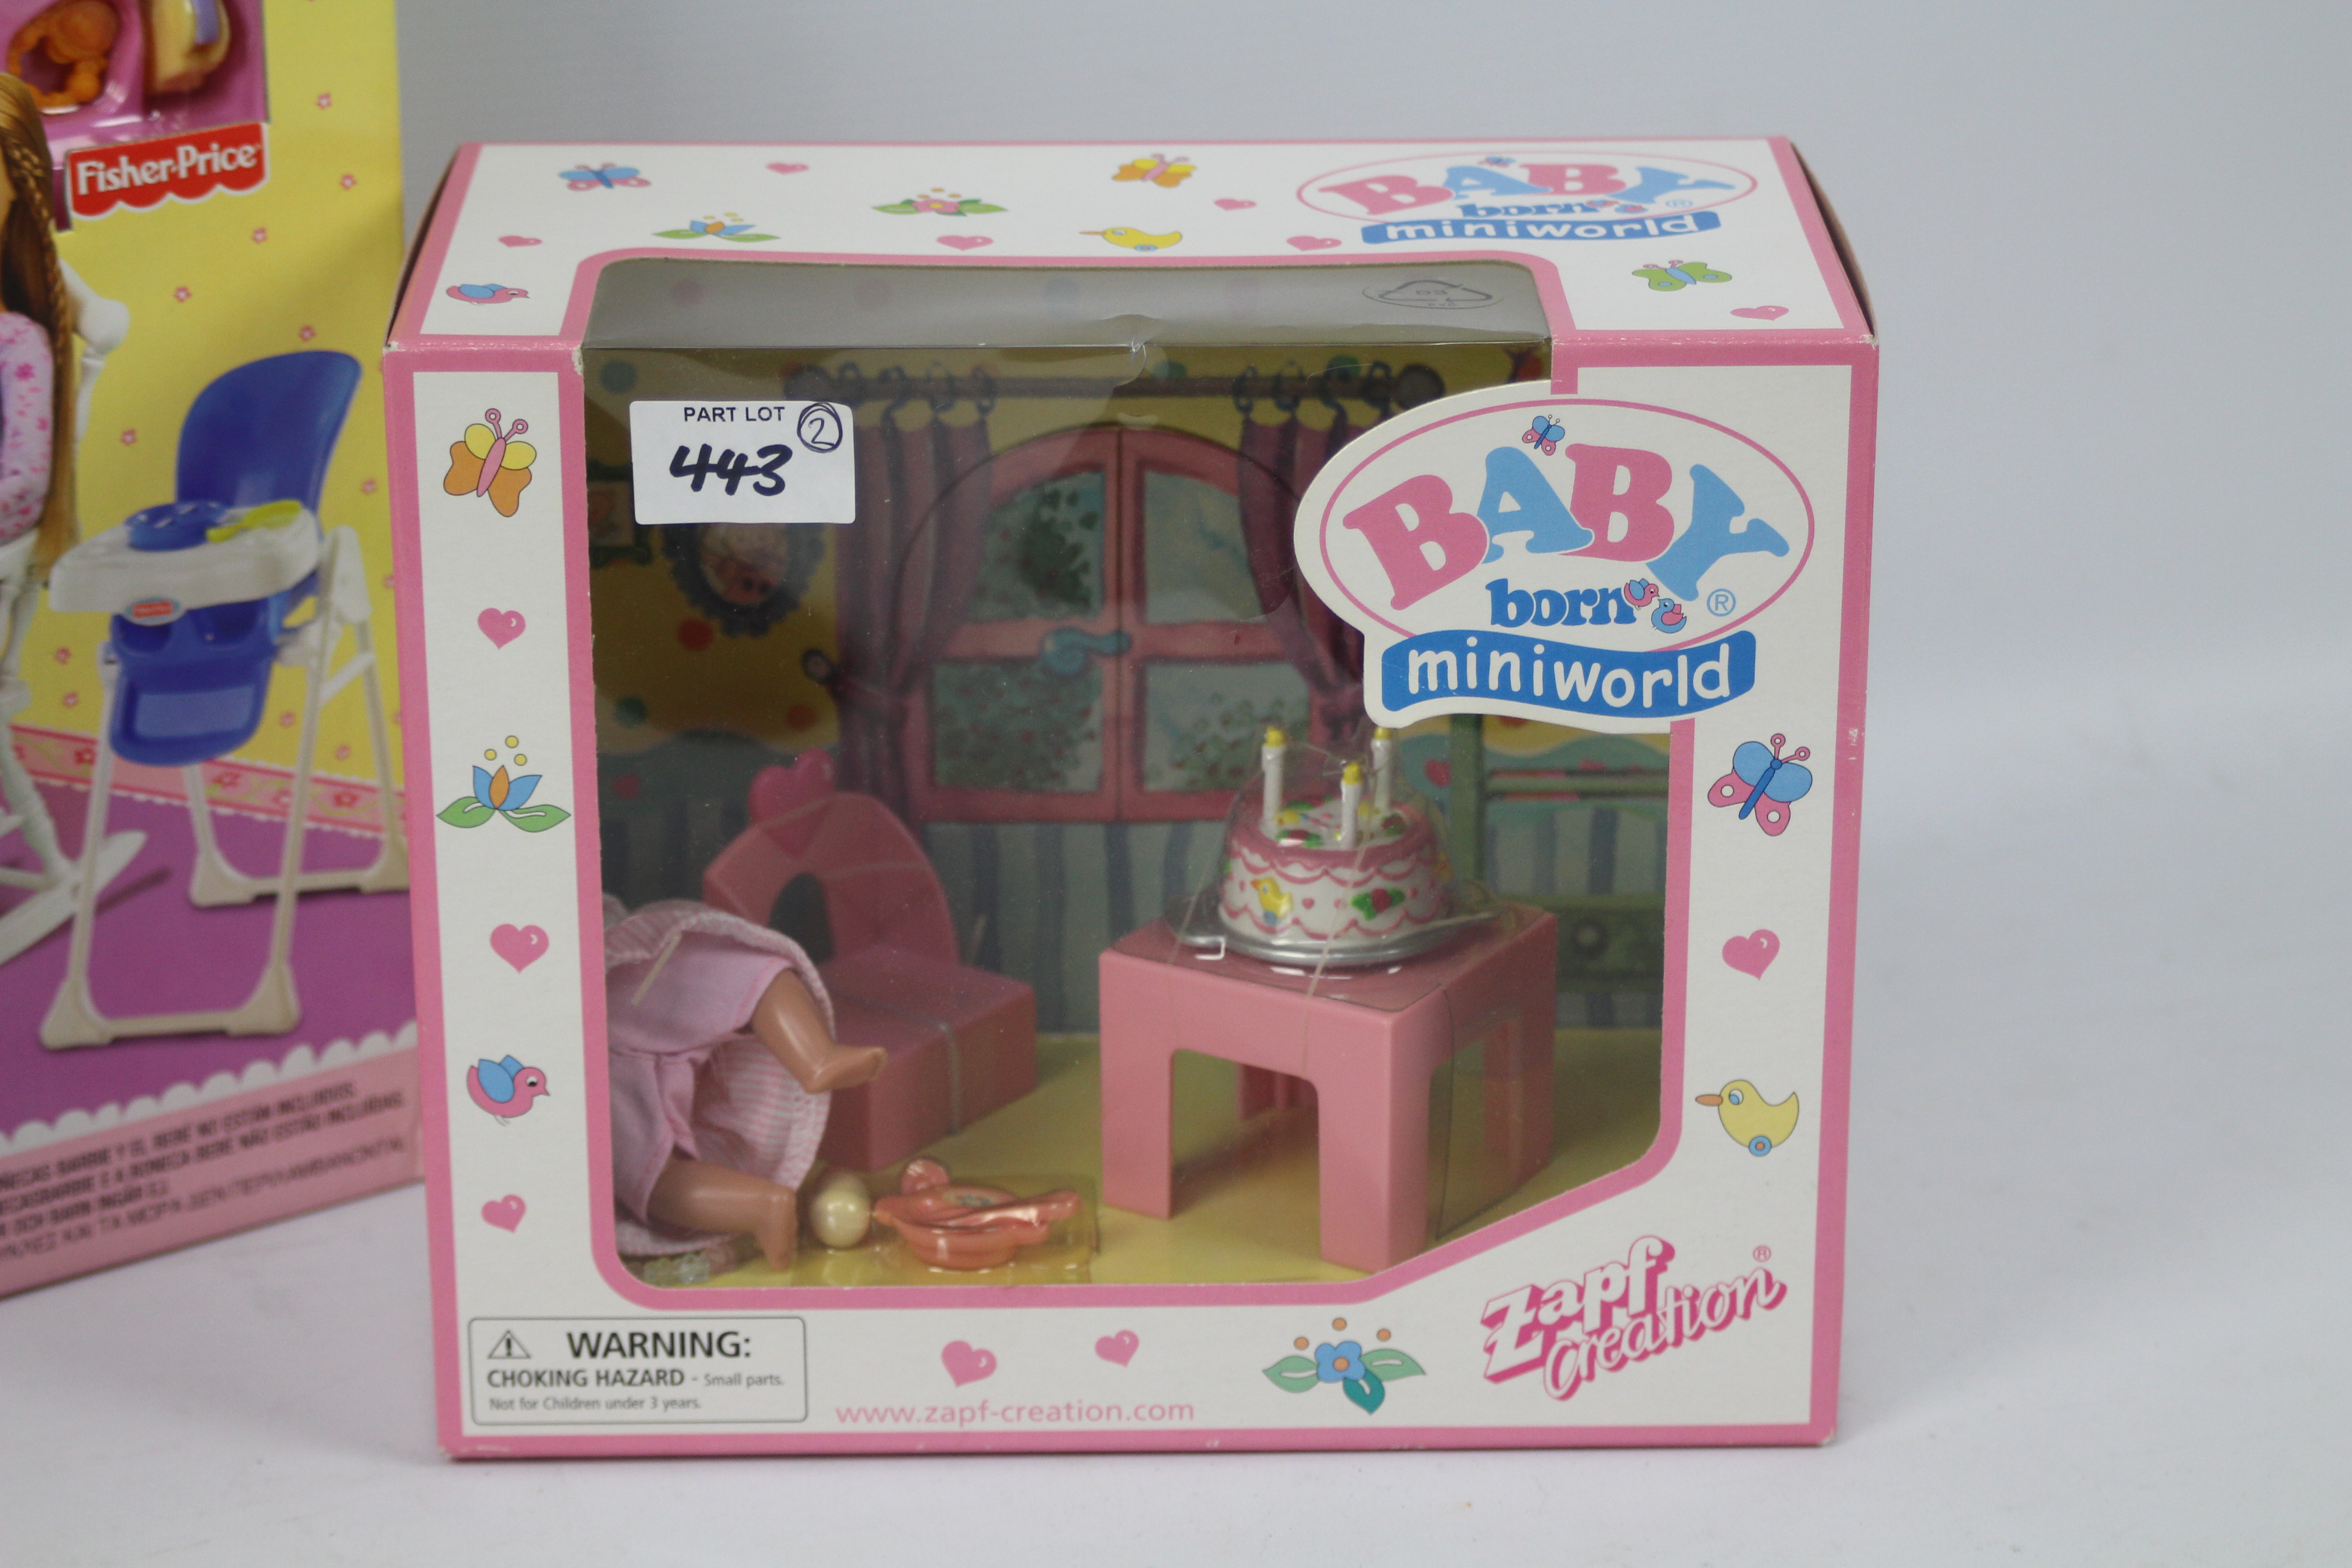 Mattel & Zapf - A Mattel/Fisher Price nursery playset, - Image 2 of 3